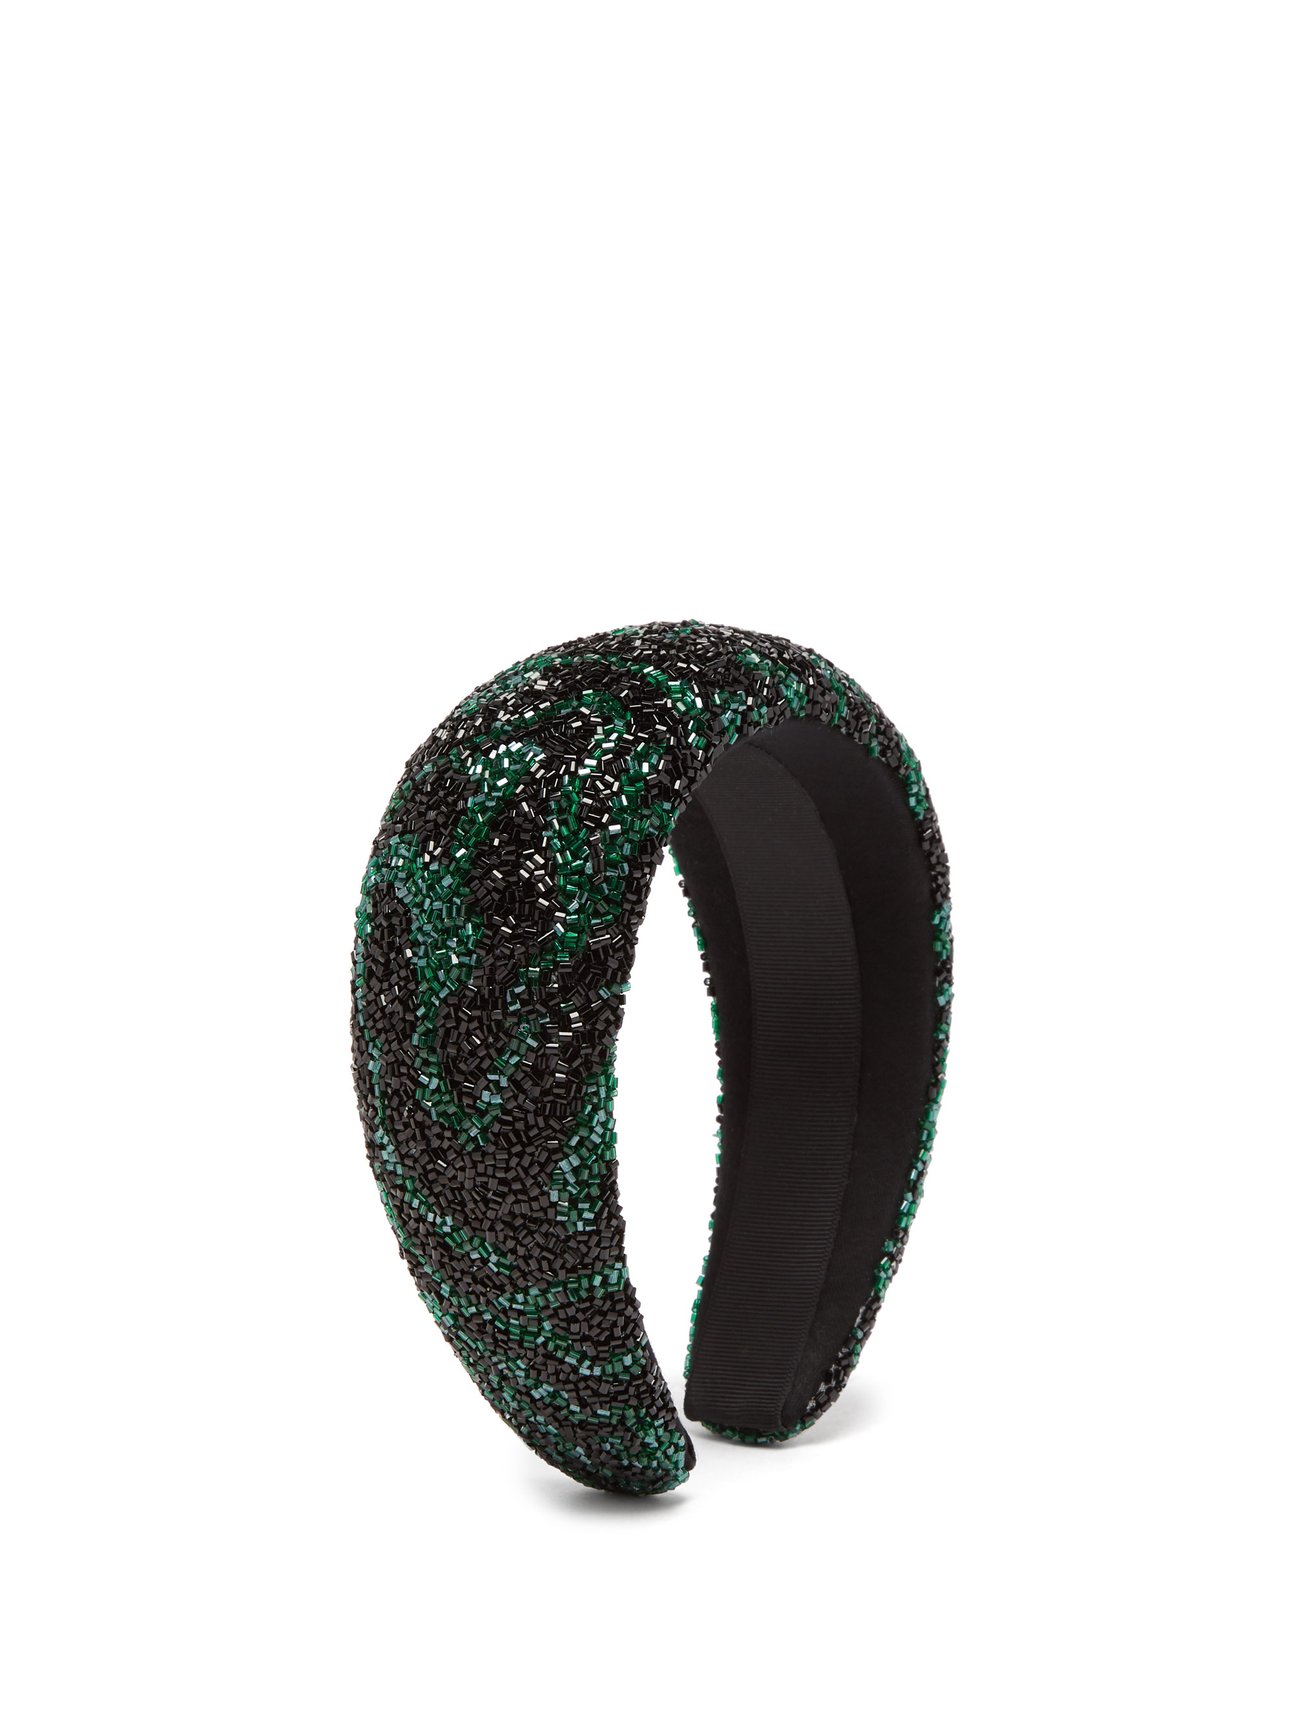 Beaded black and green headband from GANNI 